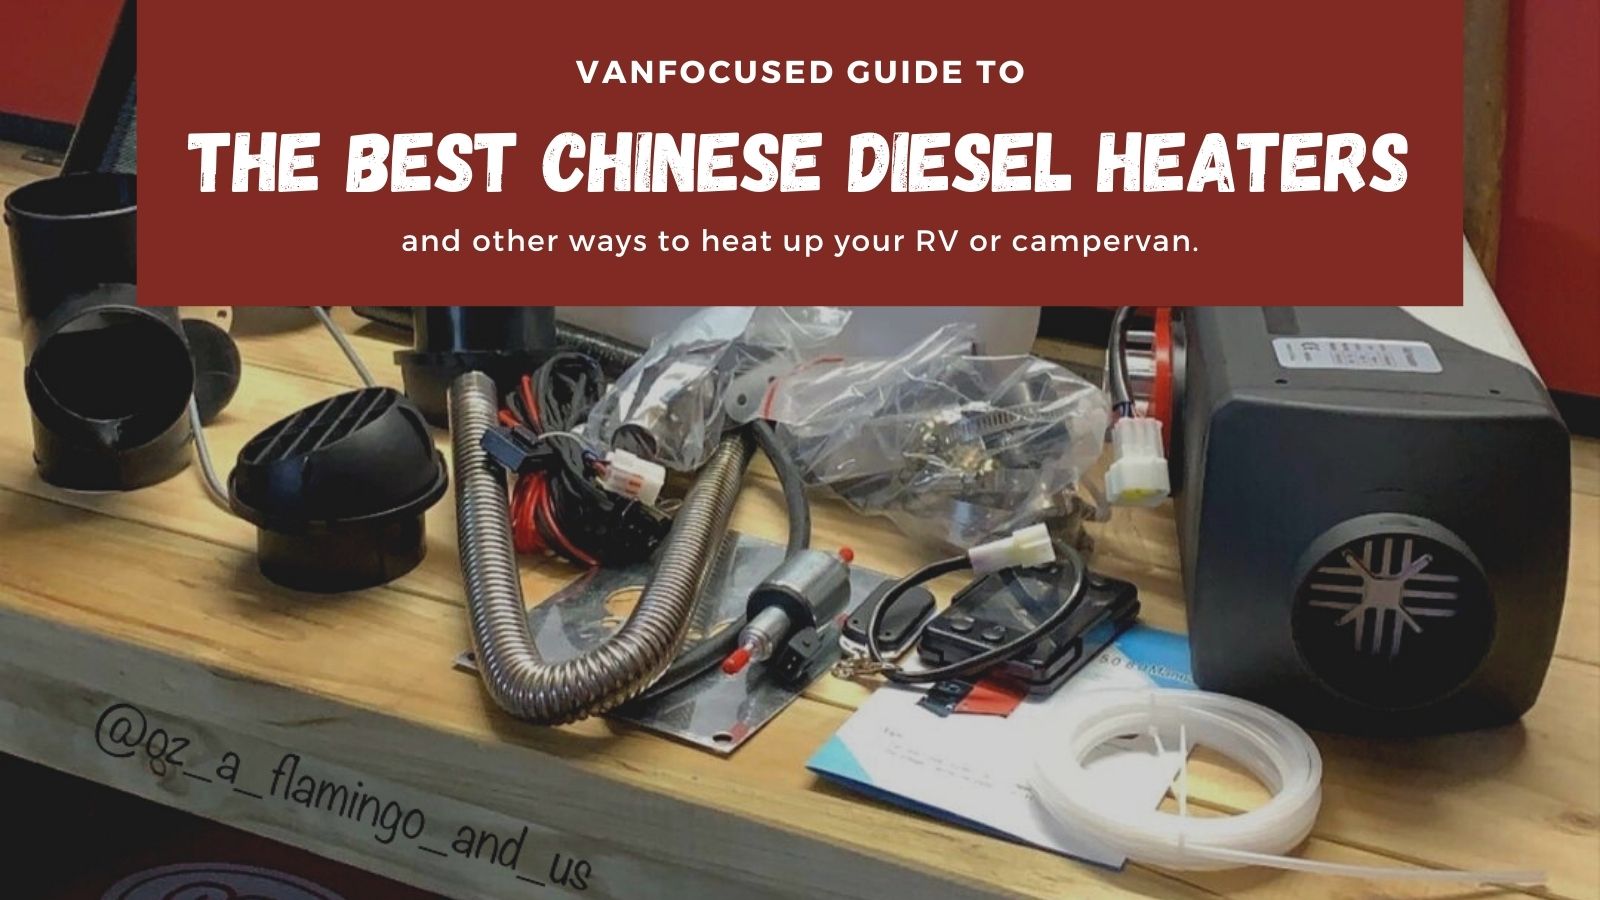 https://vanfocused.com/wp-content/uploads/2020/11/best-chinese-diesel-heaters-featured-image.jpg